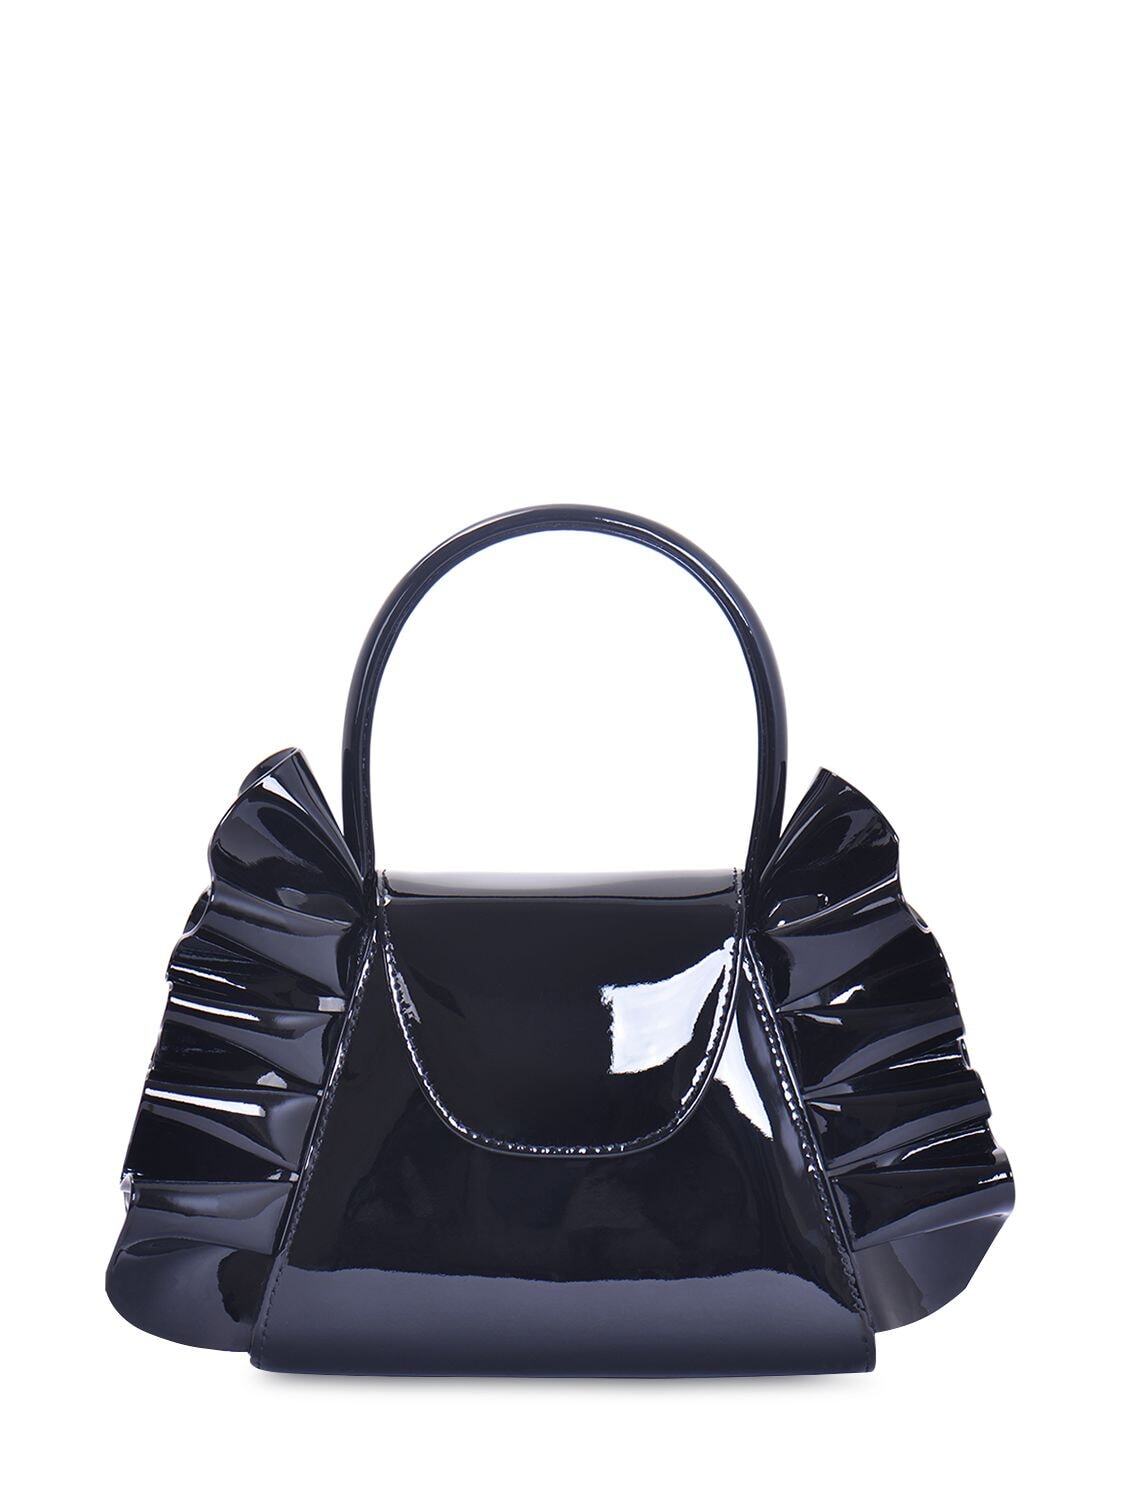 ANDREA WAZEN Franca Patent Leather Bag W/ Ruffles in black